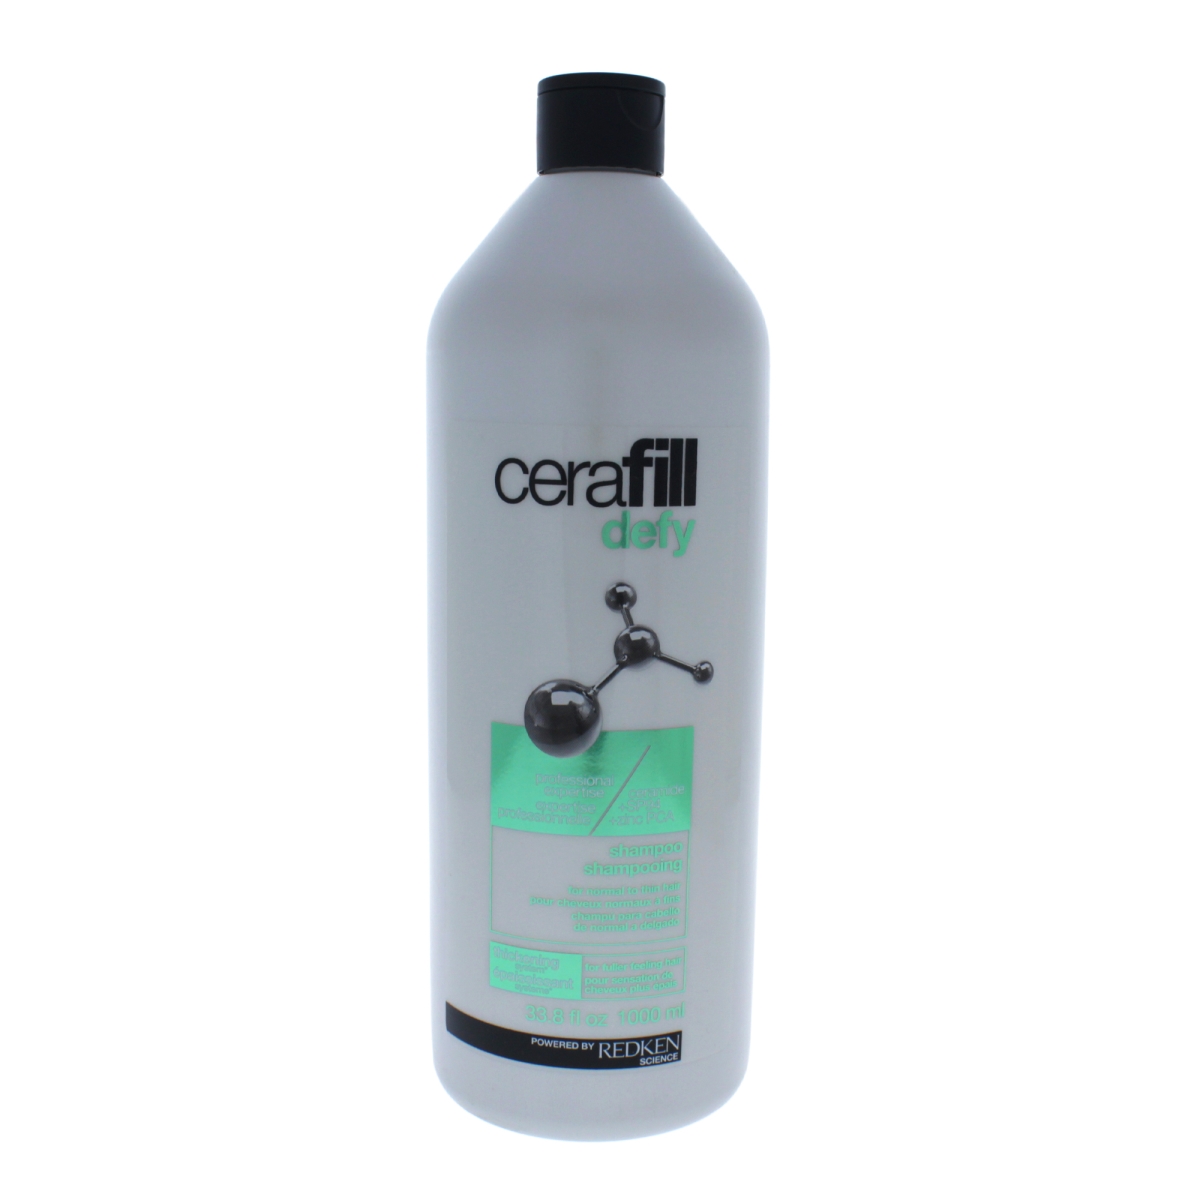 U-hc-11524 33.8 Oz Unisex Cerafill Defy Thickening Shampoo